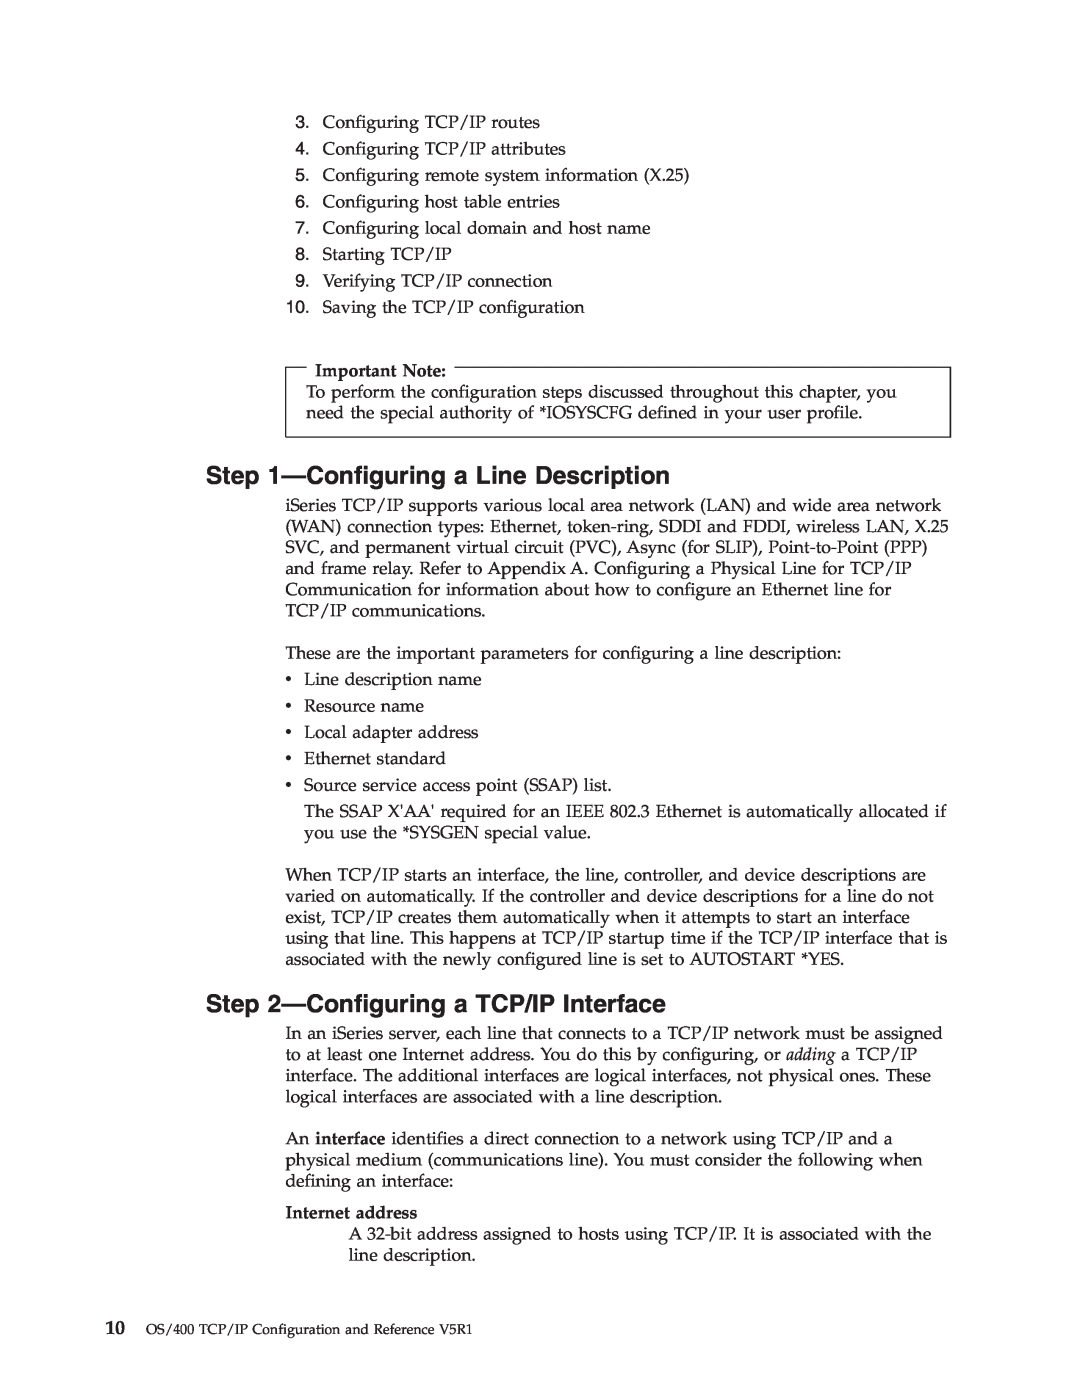 IBM SC41-5420-04 manual Configuringa Line Description, Configuringa TCP/IP Interface, Important Note, Internet address 